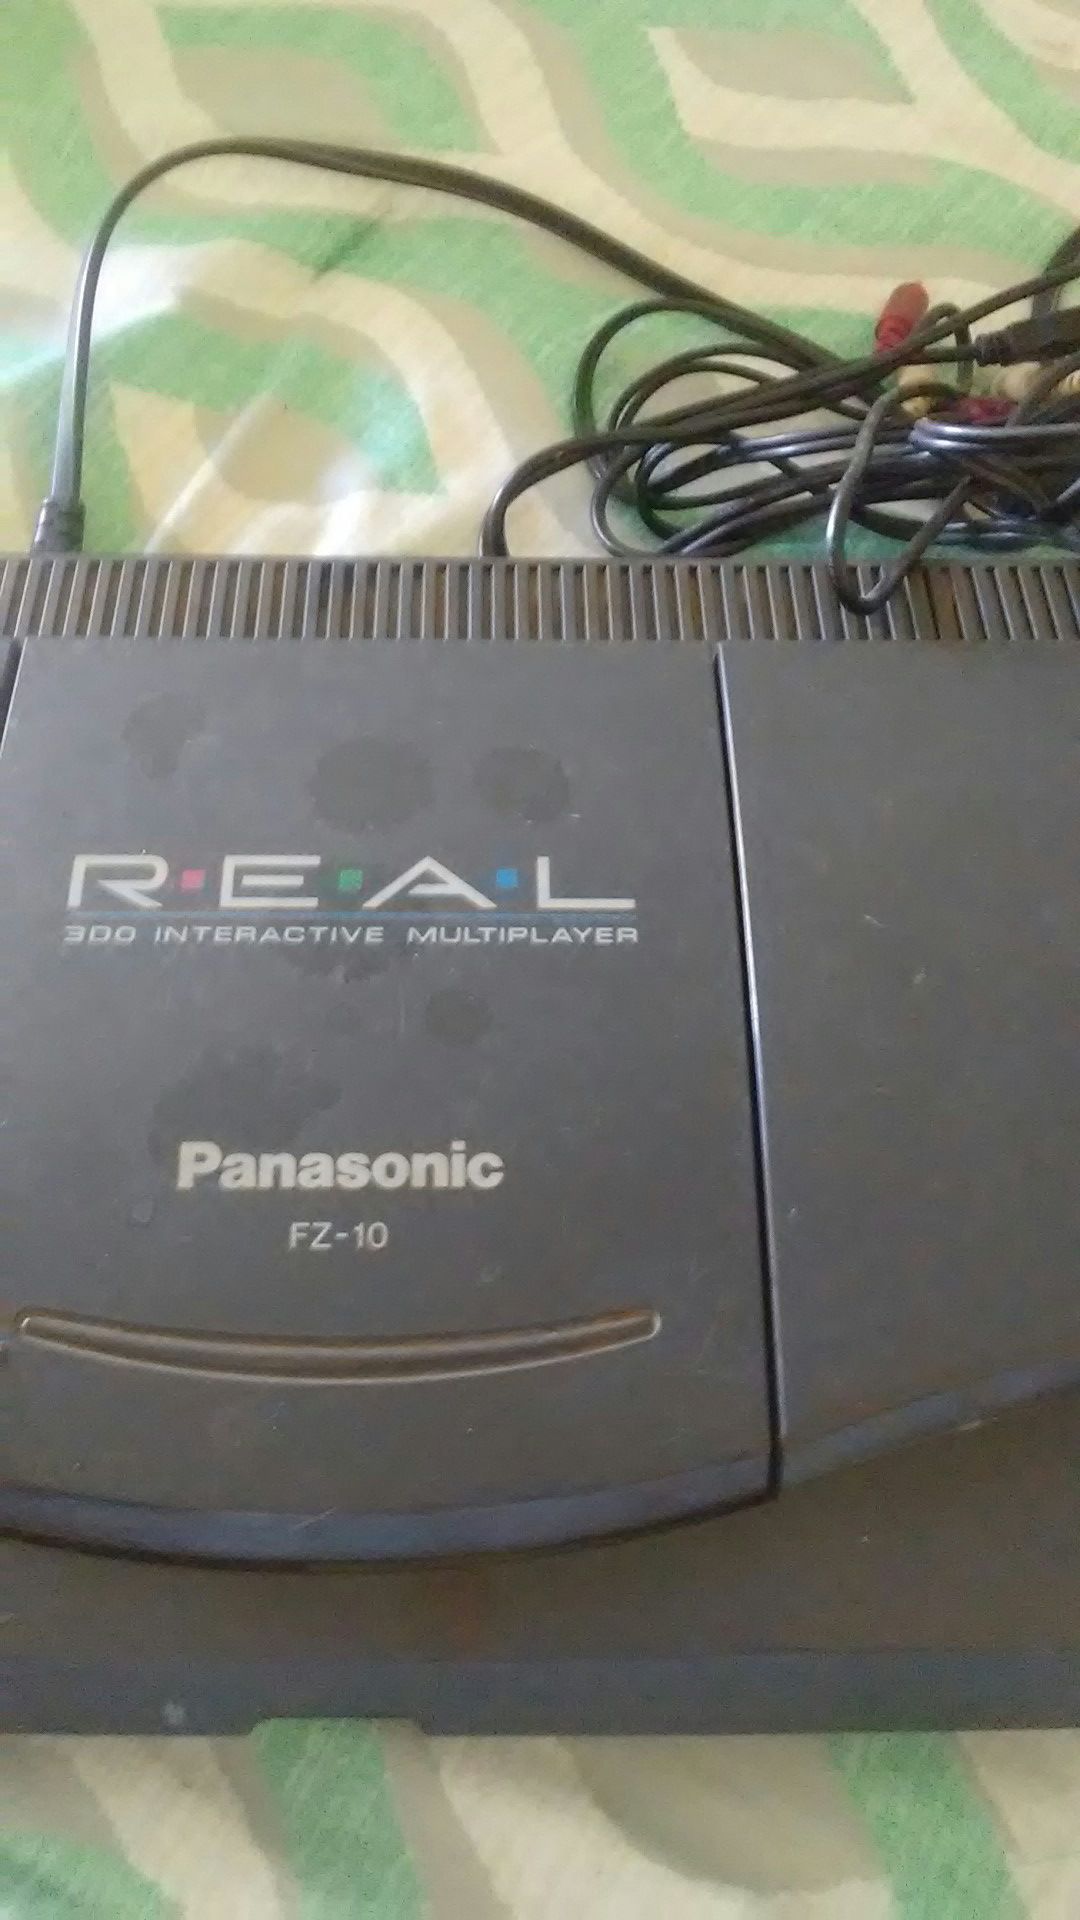 "Panasonic REAL 3DO Interactive Multiplayer"